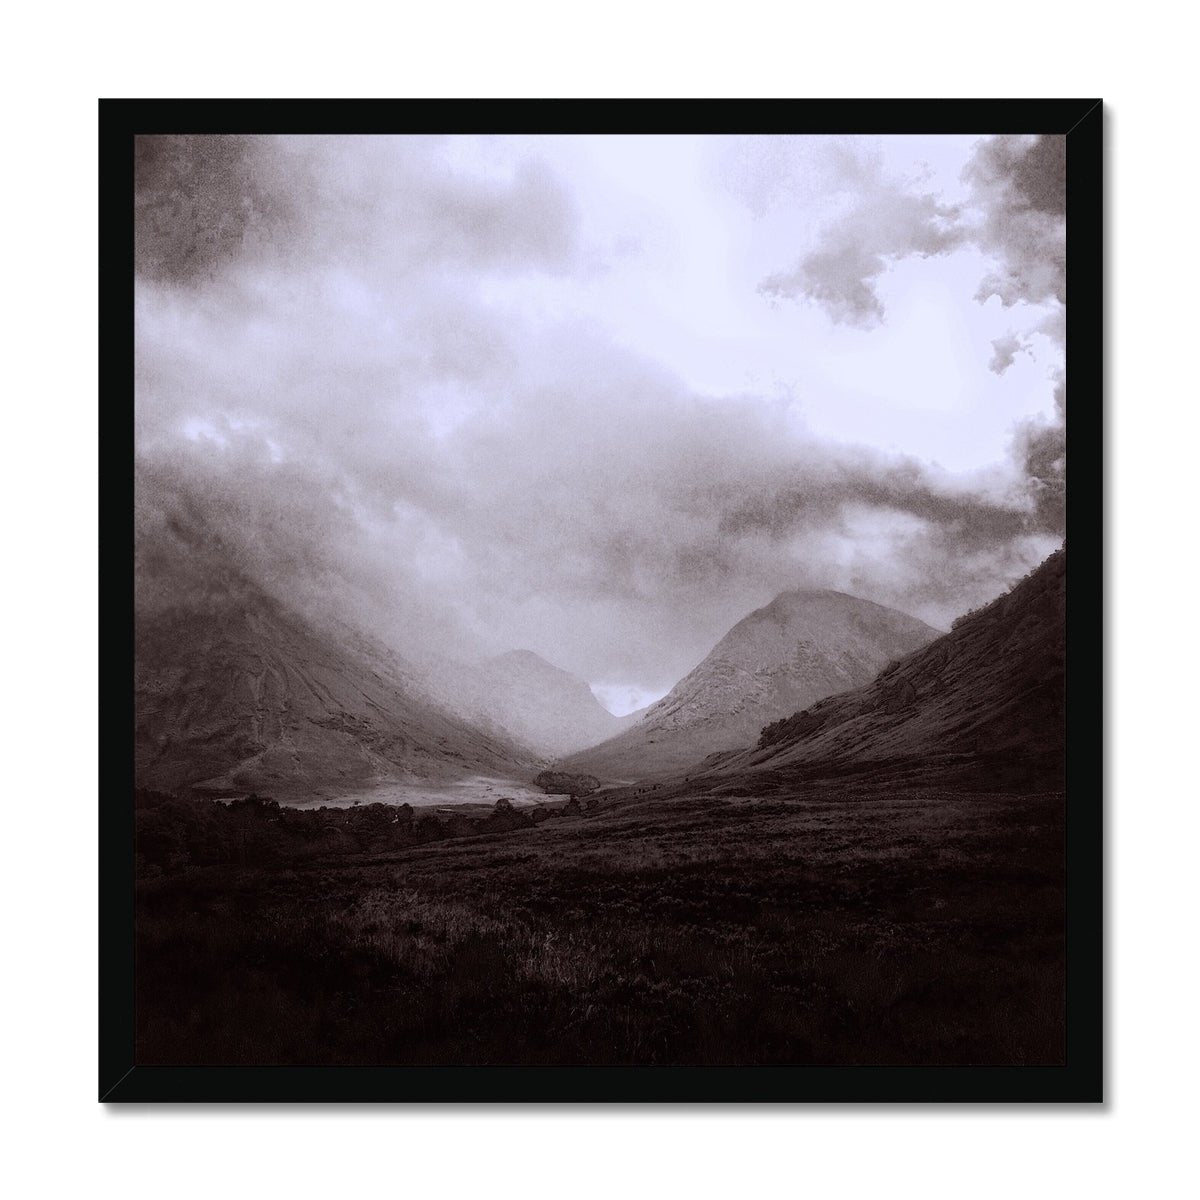 Glencoe Mist Painting | Framed Prints From Scotland-Framed Prints-Glencoe Art Gallery-20"x20"-Black Frame-Paintings, Prints, Homeware, Art Gifts From Scotland By Scottish Artist Kevin Hunter